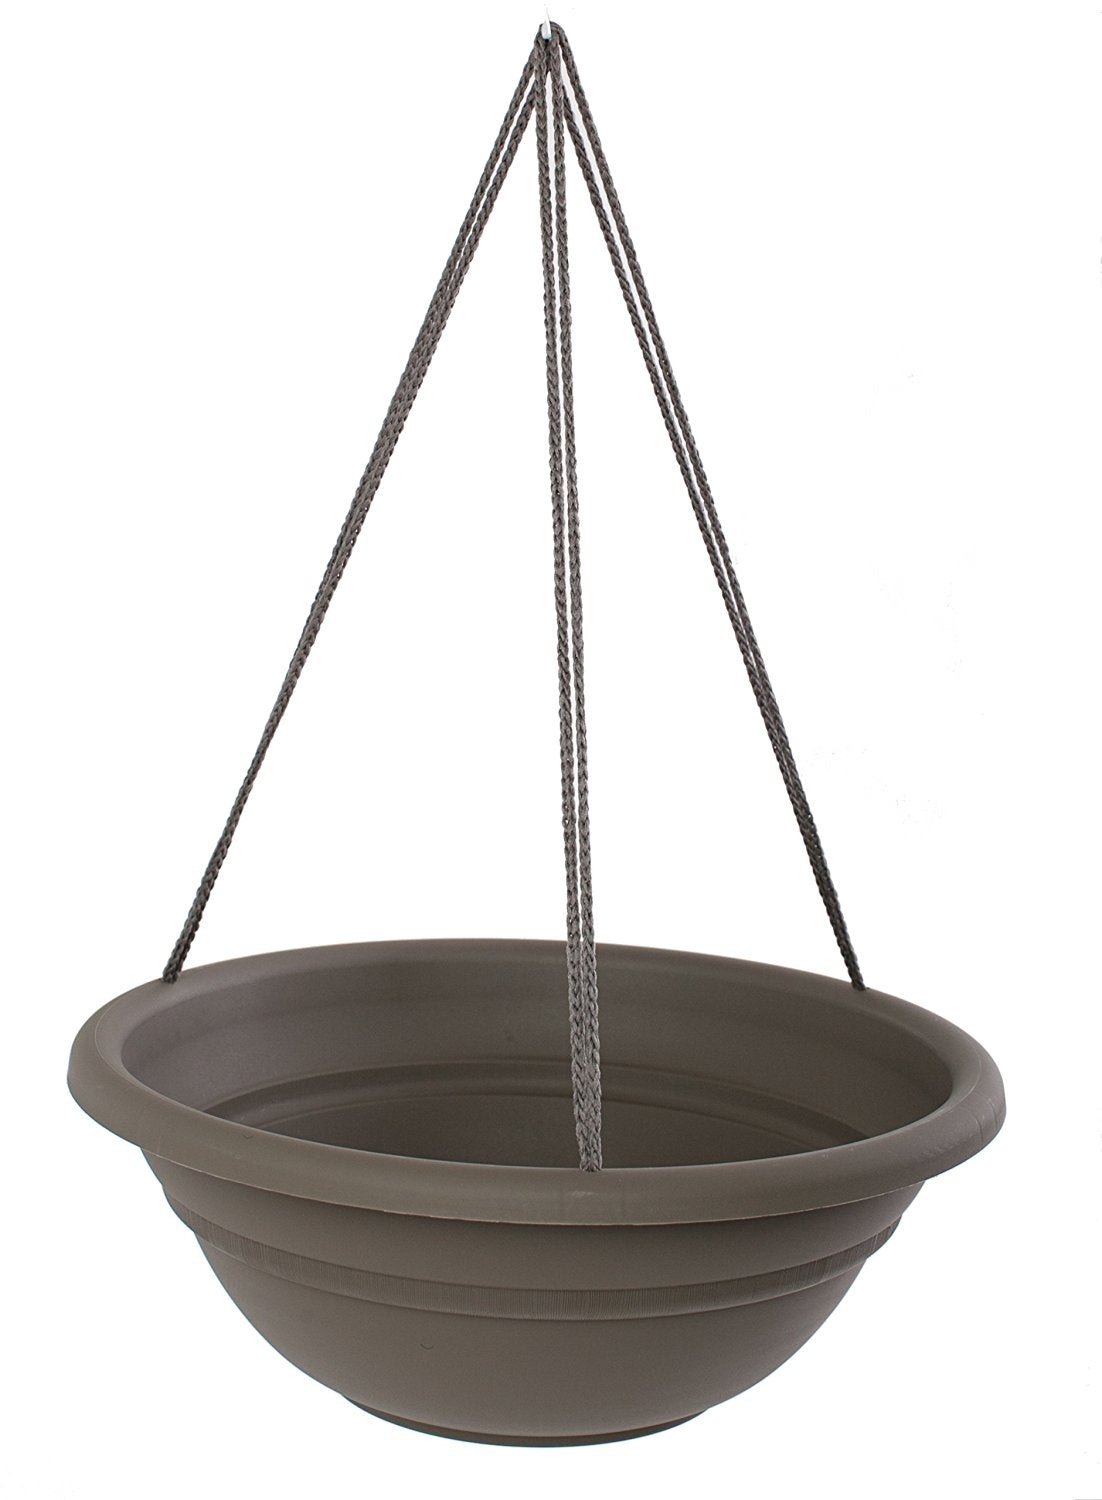 buy hanging planters & pots at cheap rate in bulk. wholesale & retail landscape maintenance tools store.